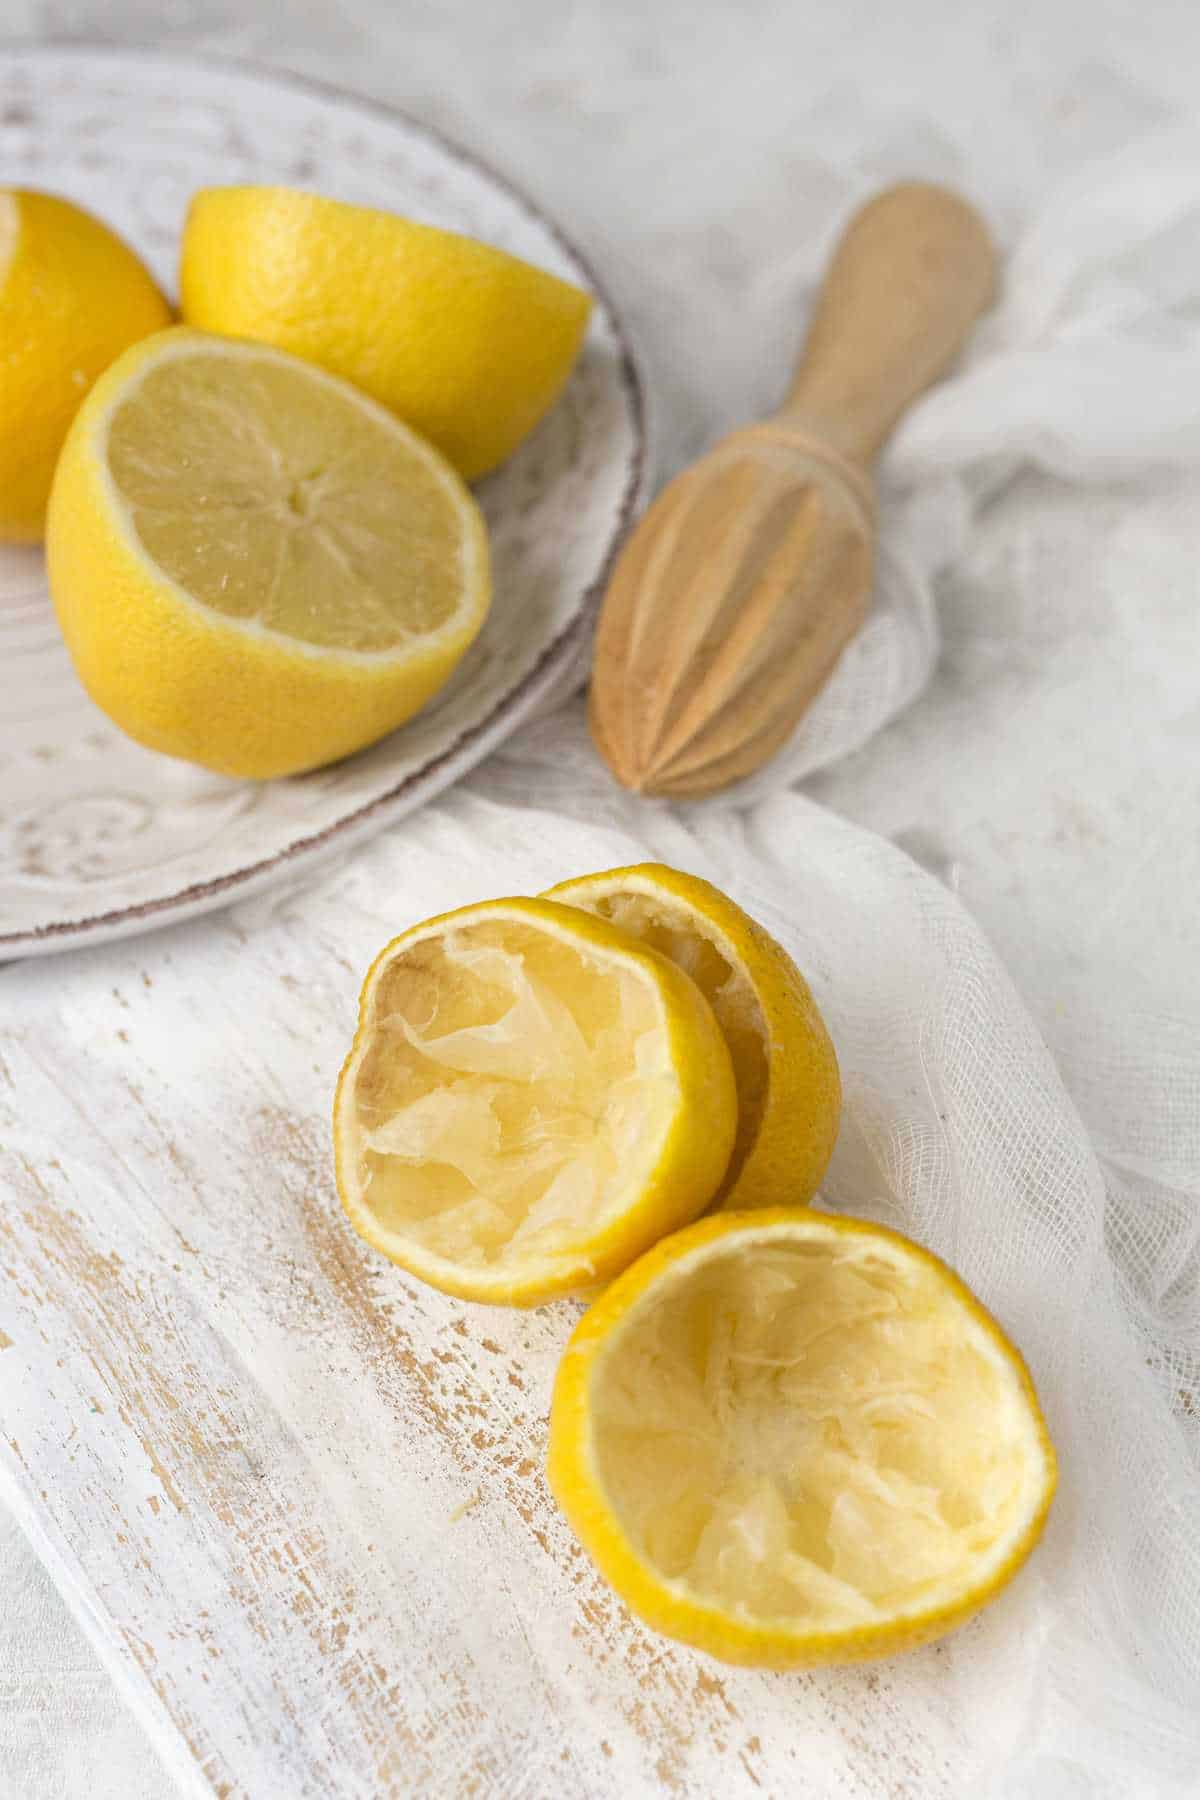 Wooden citrus reamer and juiced lemons.